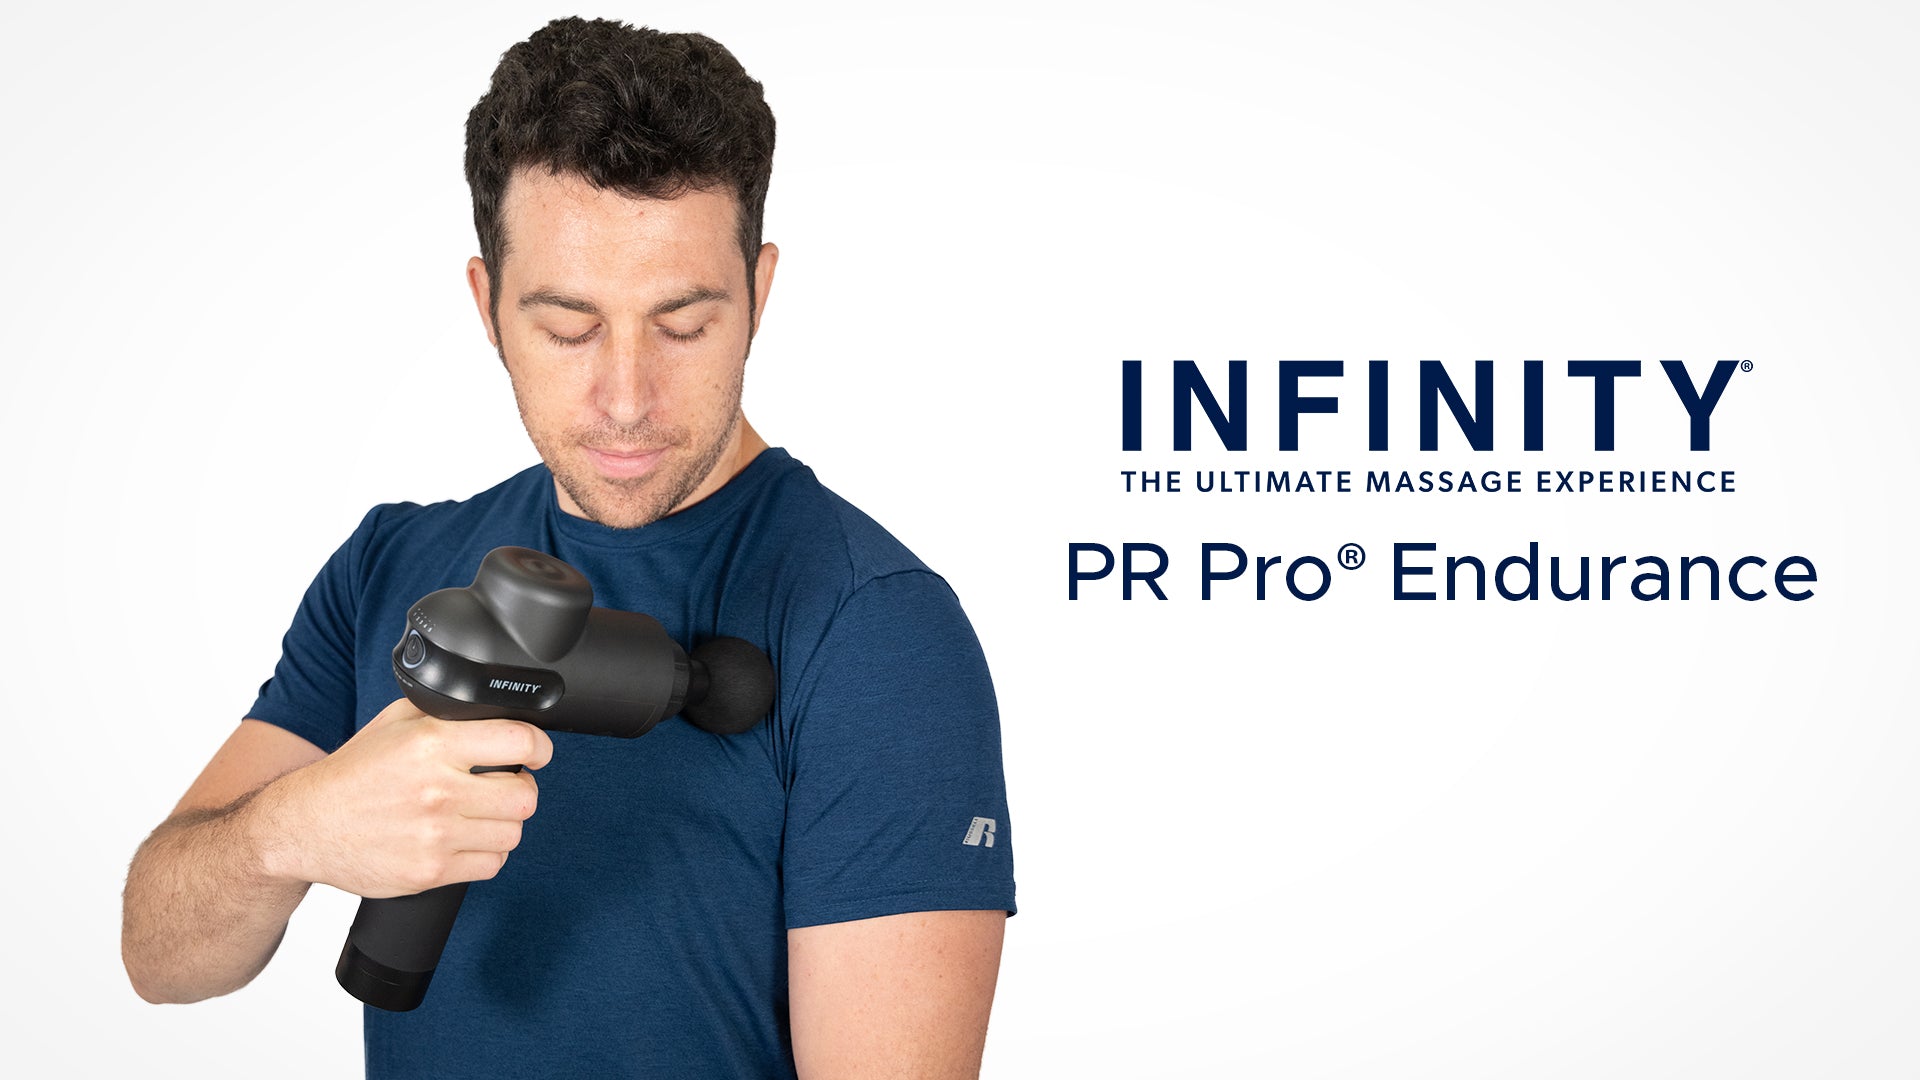 Infinity PR Pro Endurance Percussion Massage Device